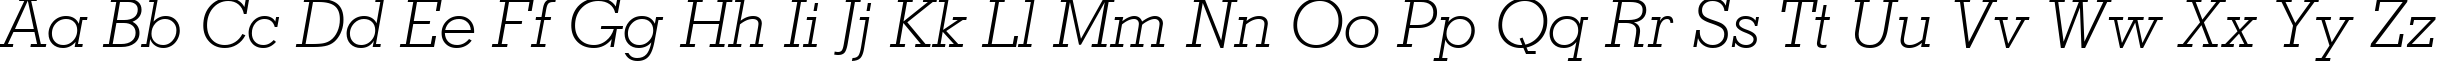 Пример написания английского алфавита шрифтом Geometric Slabserif 703 Light Italic BT